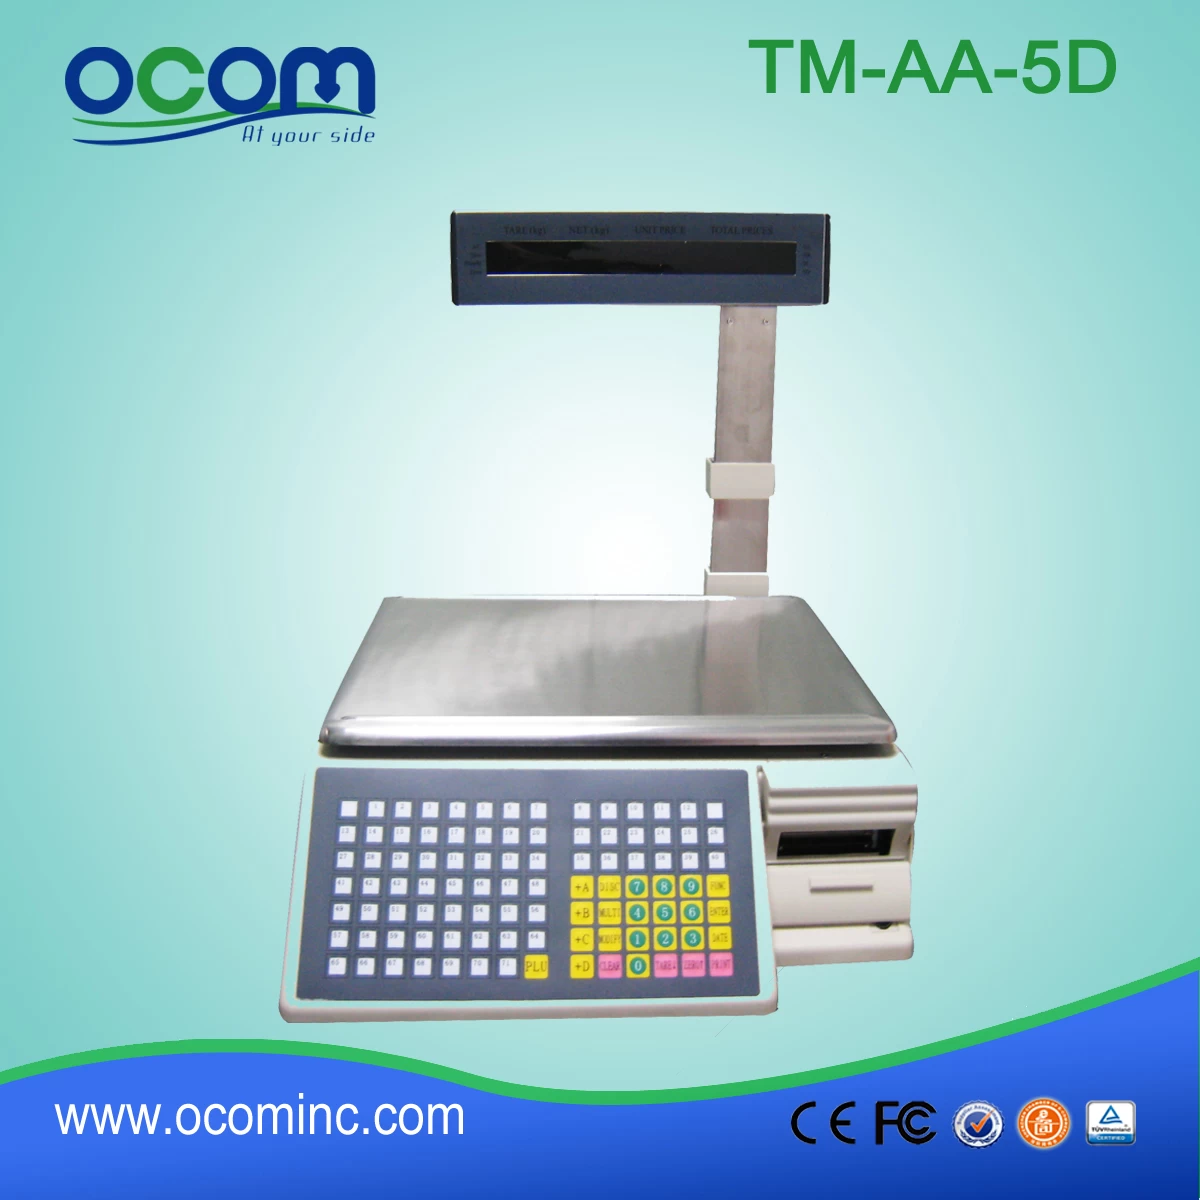 TM-AA-5D Lan/Ethernet Port Barcode Label Printing Weighing Scales